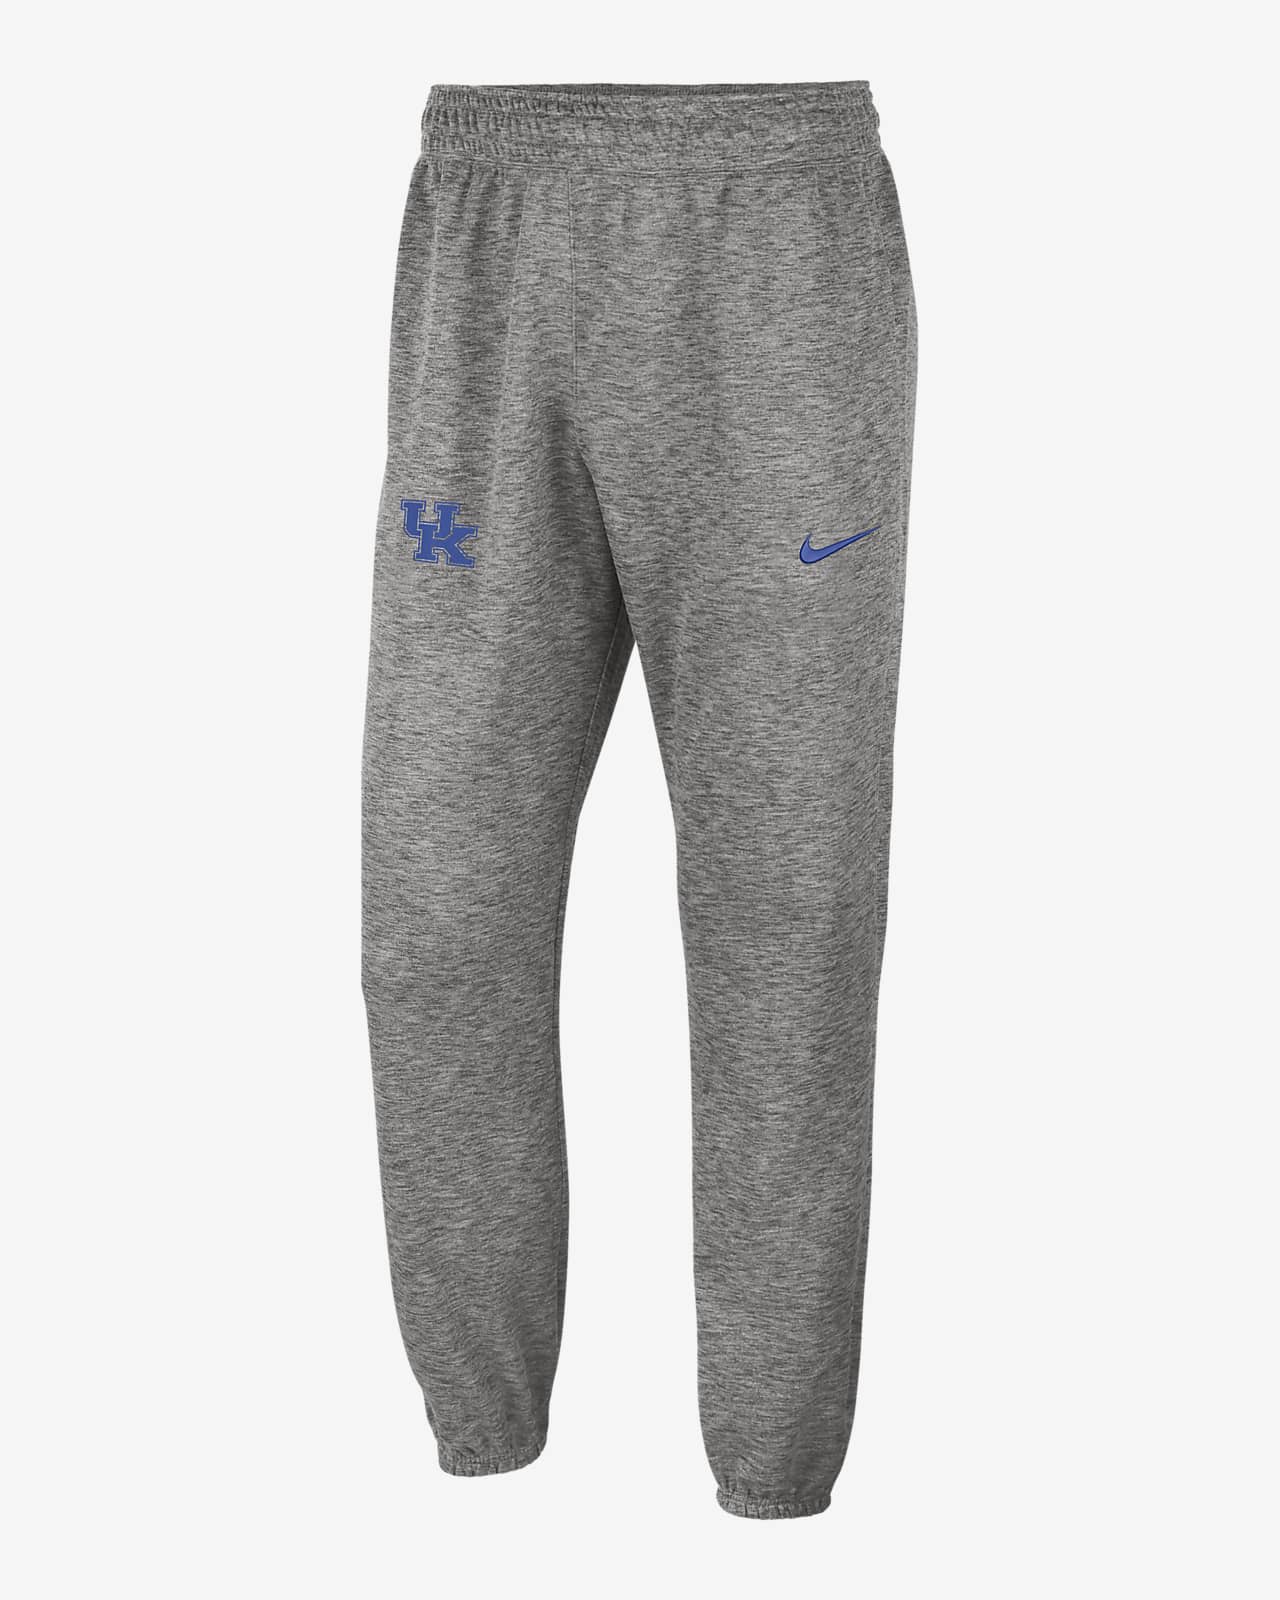 Célula somatica Identidad concepto Nike College Dri-FIT Spotlight (Kentucky) Men's Pants. Nike.com